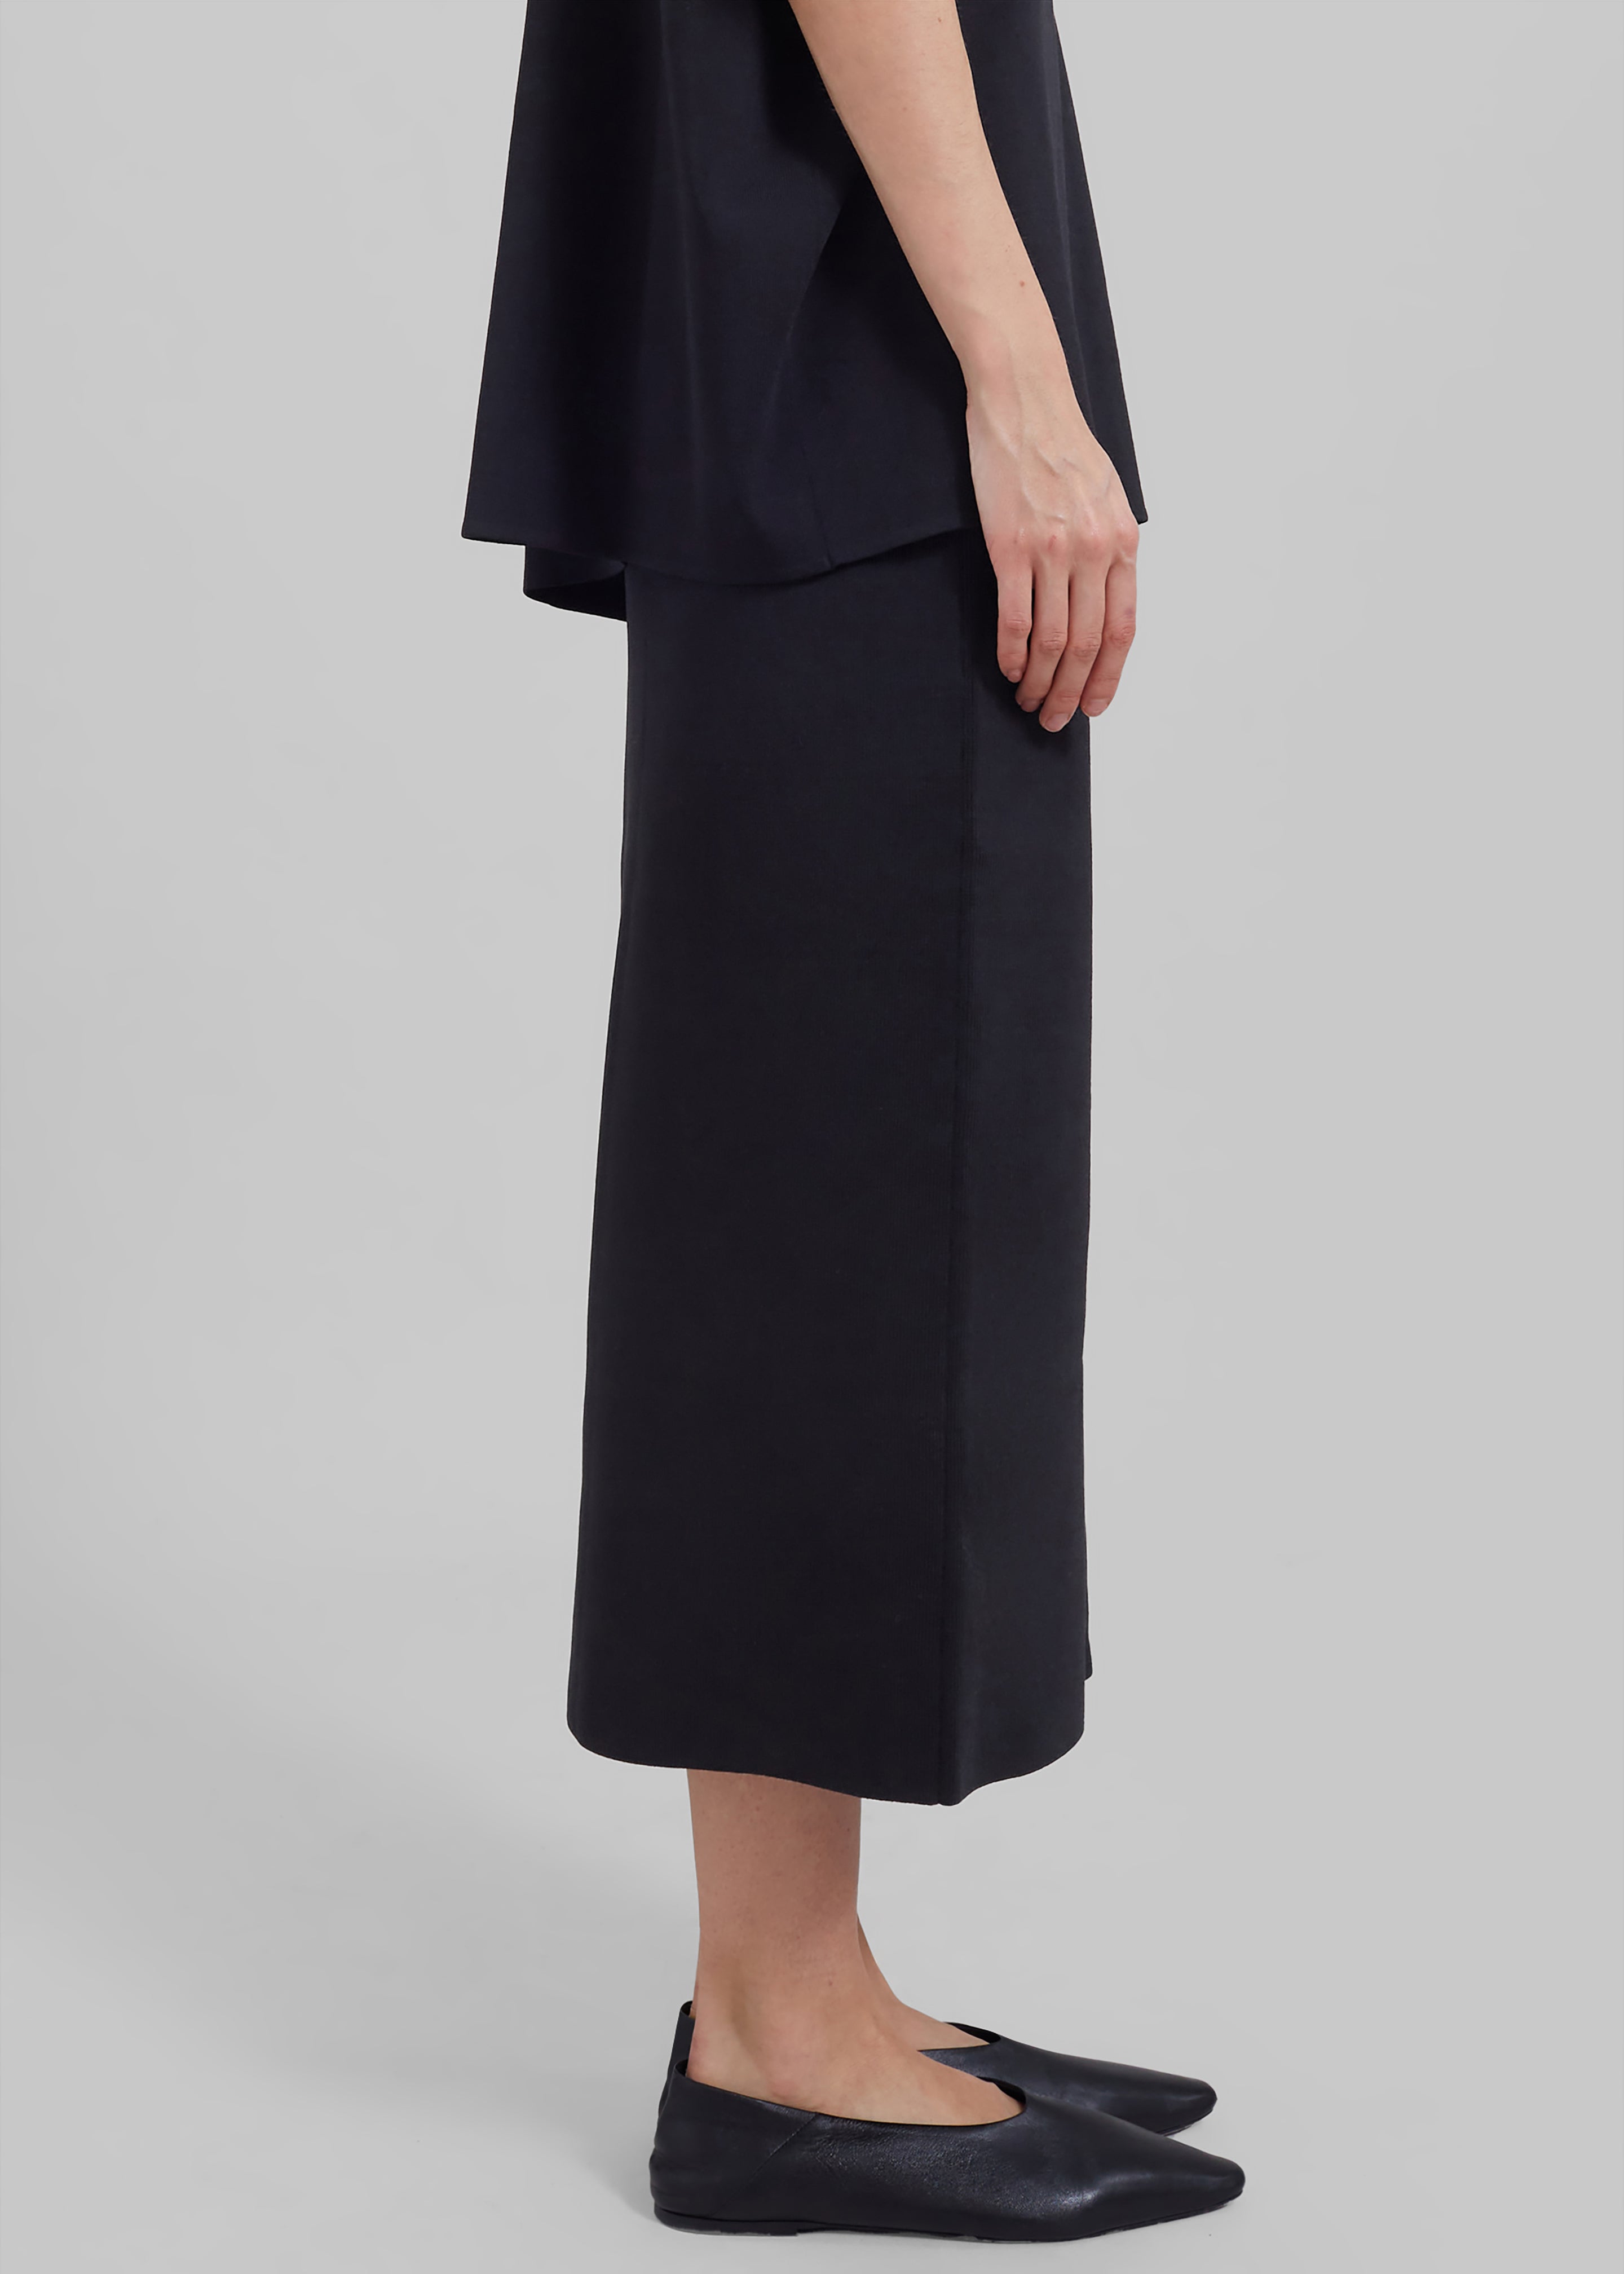 Solange Knit Pencil Skirt - Black - 7